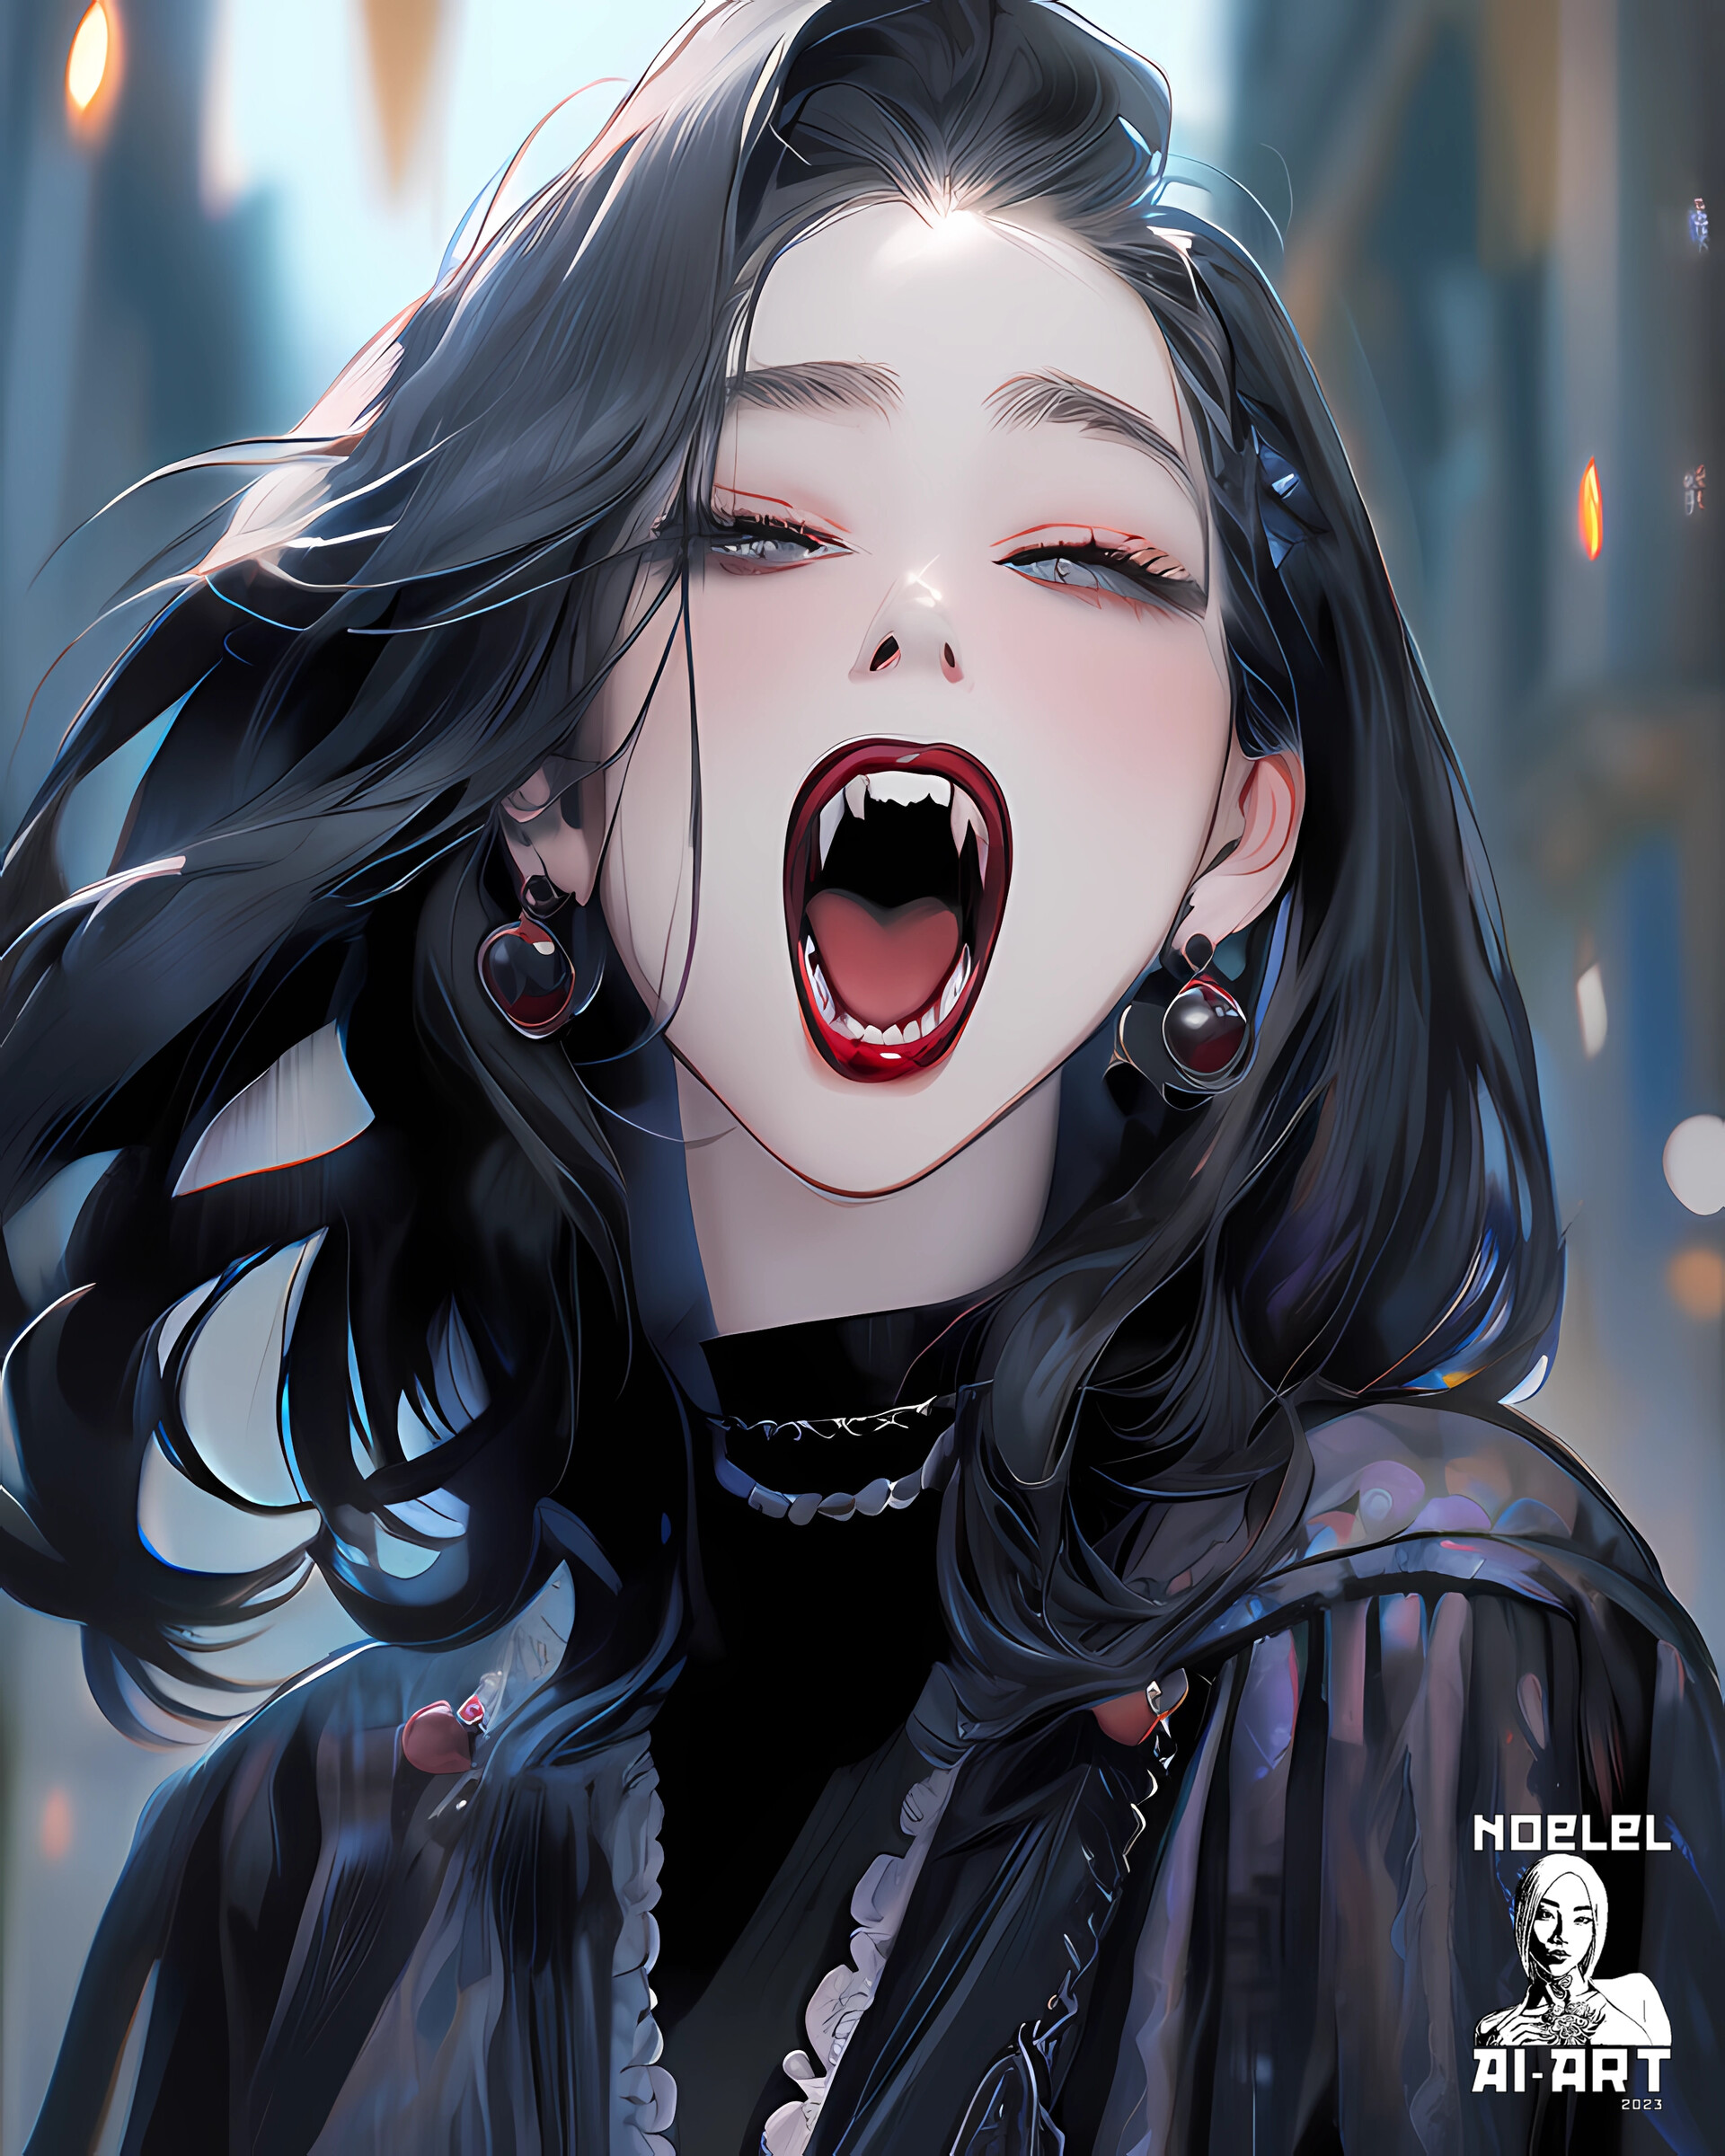 ArtStation - Portrait of a cute vampire girl